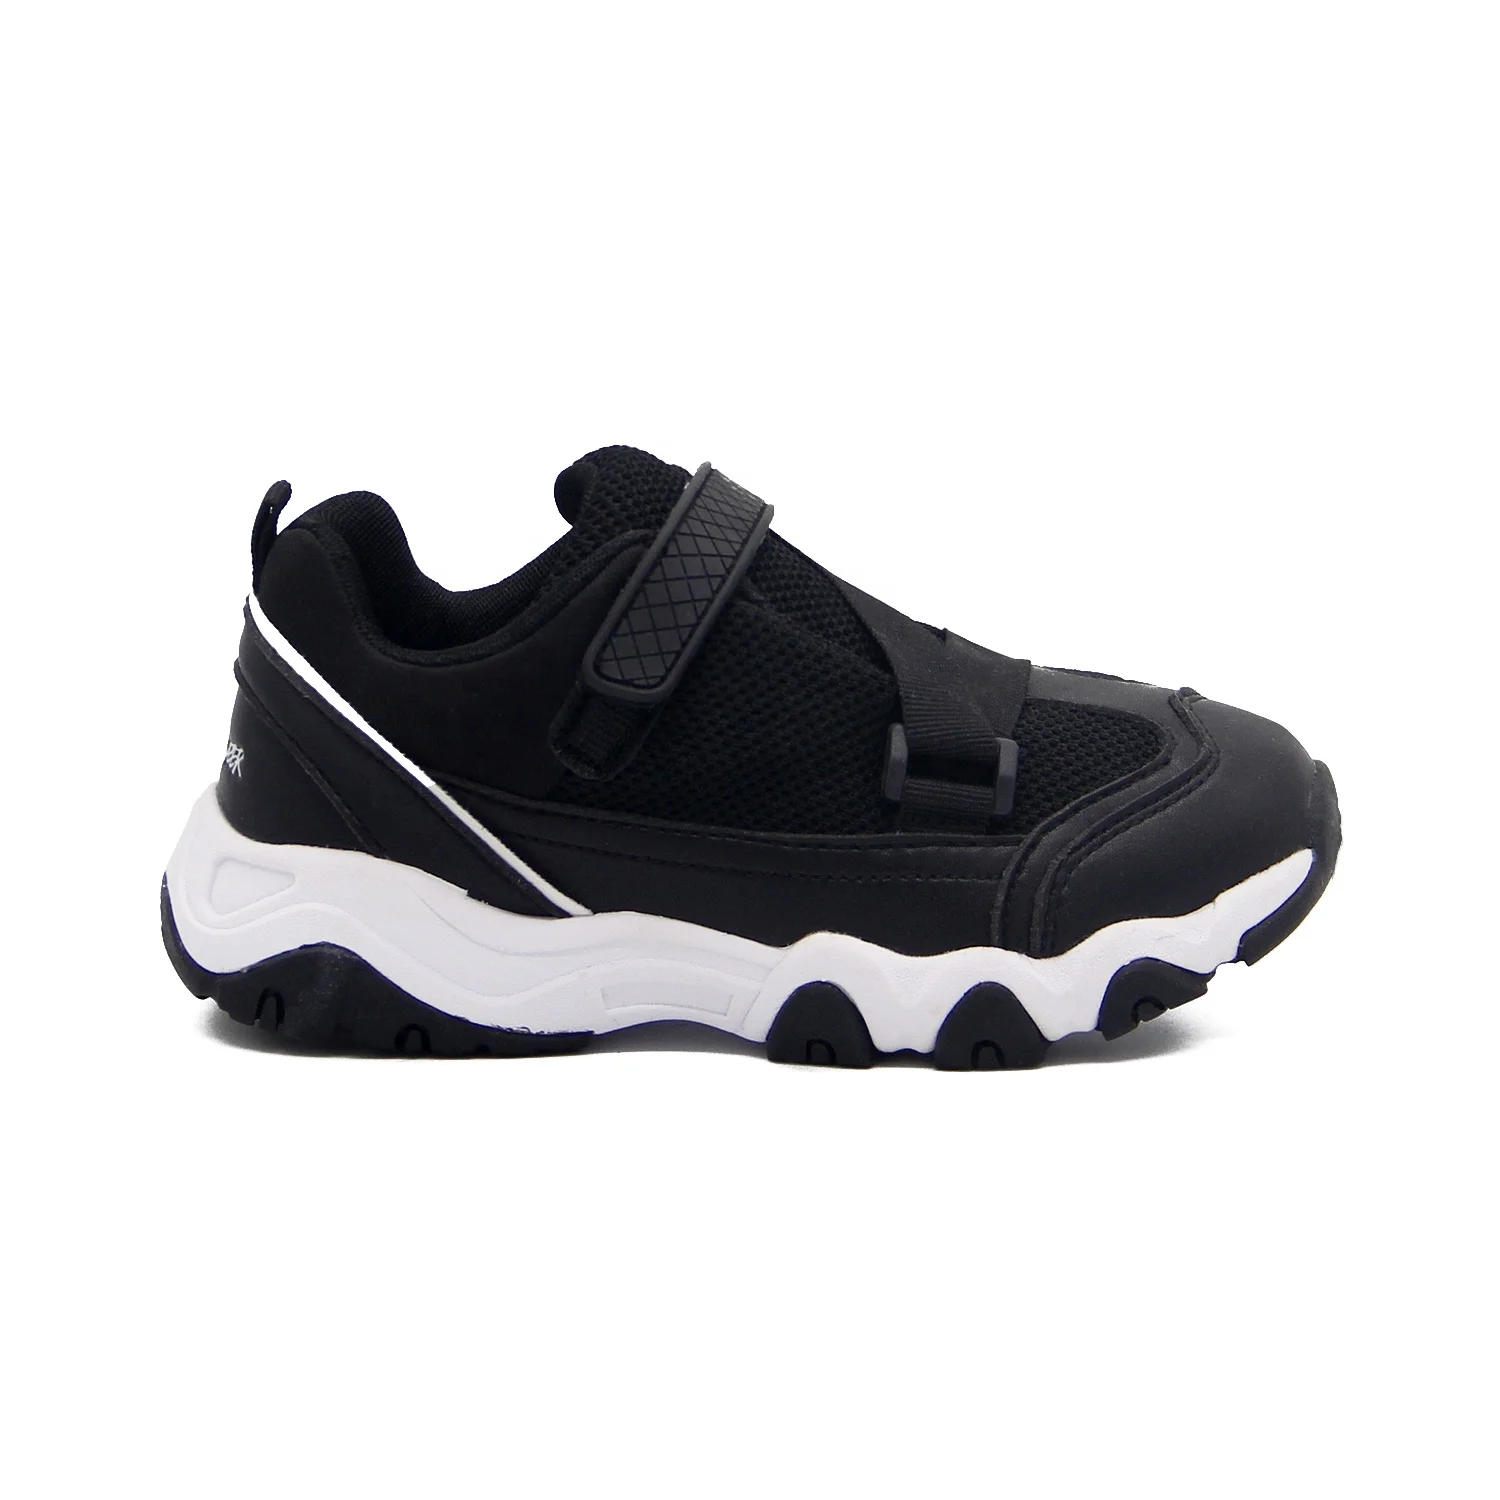 Factory Custom Black Breathable Strap Children Shoe Soft Lightweight Mesh Loafers Designer Walking Casual Sport Shoes for Kids